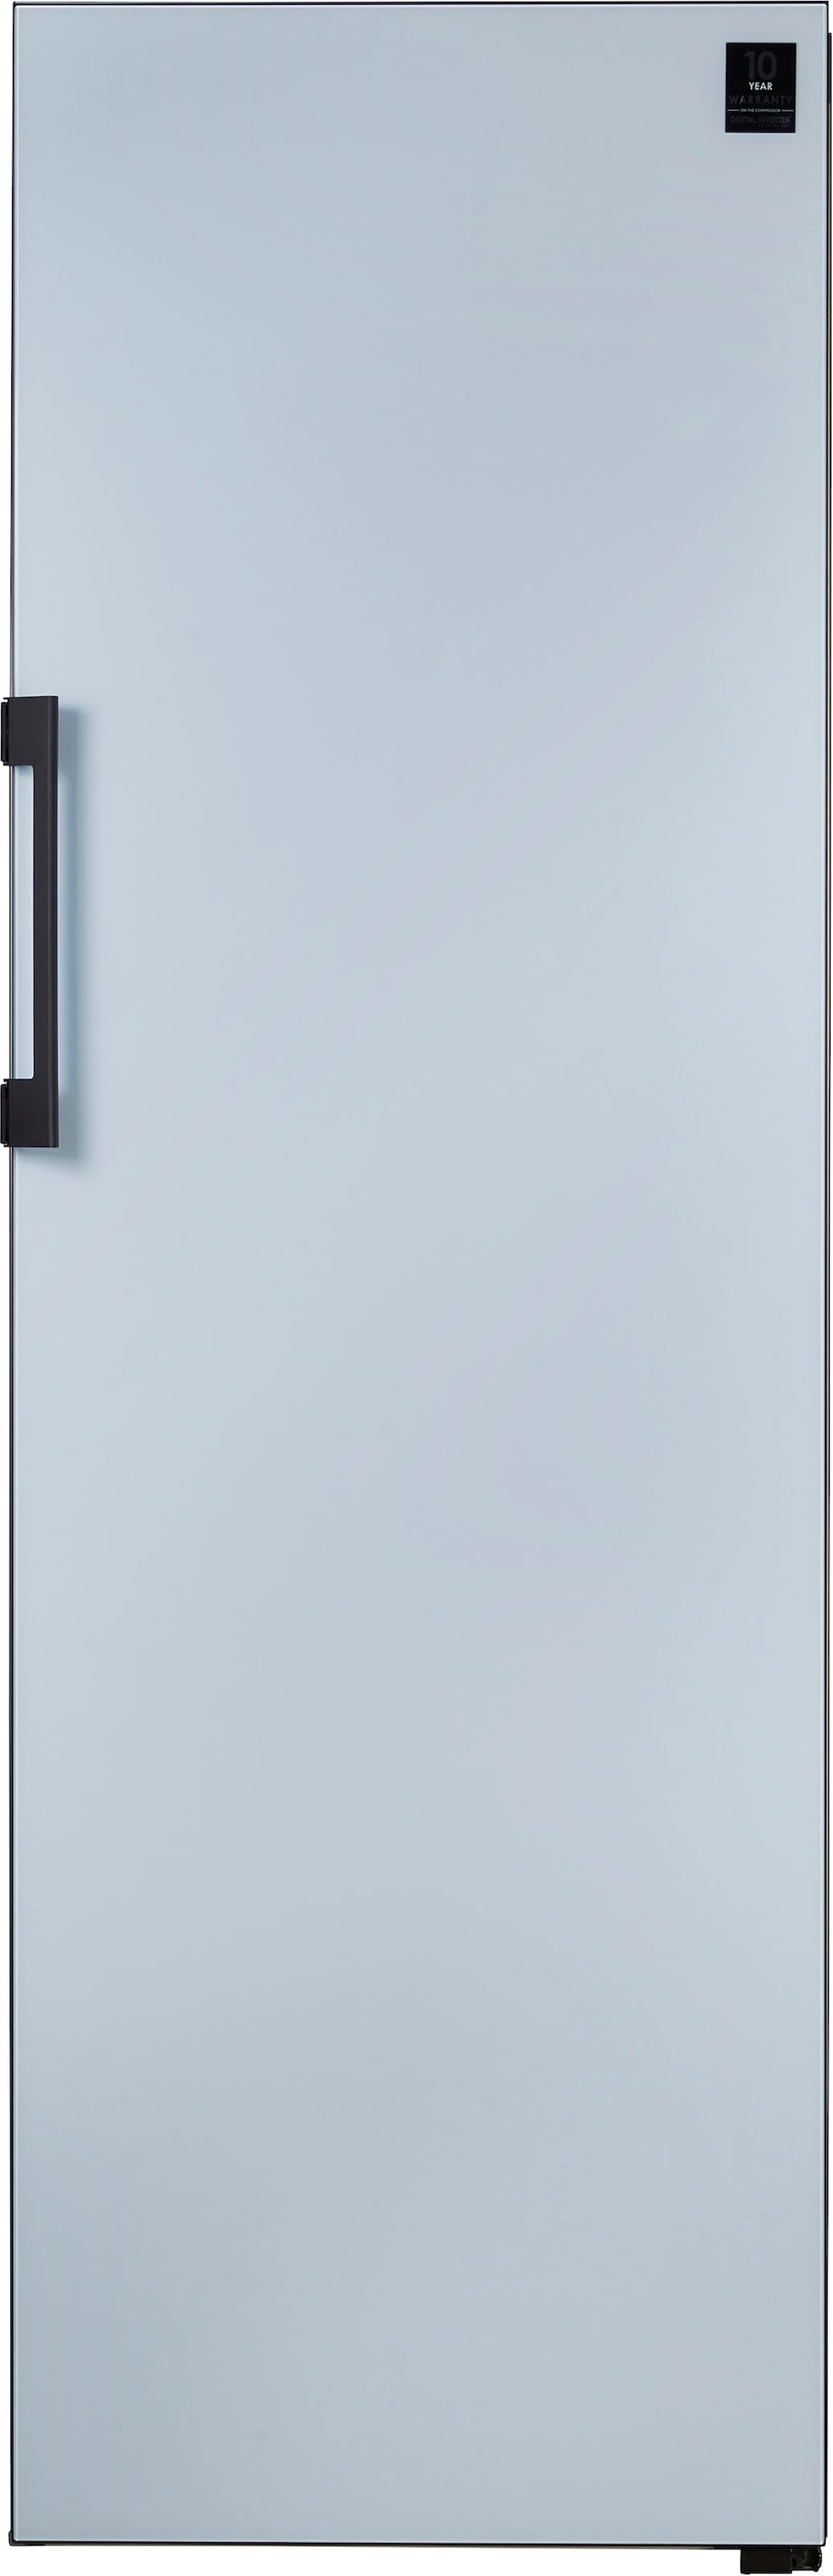 185,3 cm online Samsung RR39A746348, hoch, kaufen Kühlschrank breit »RR39A746348«, 59,5 cm bequem